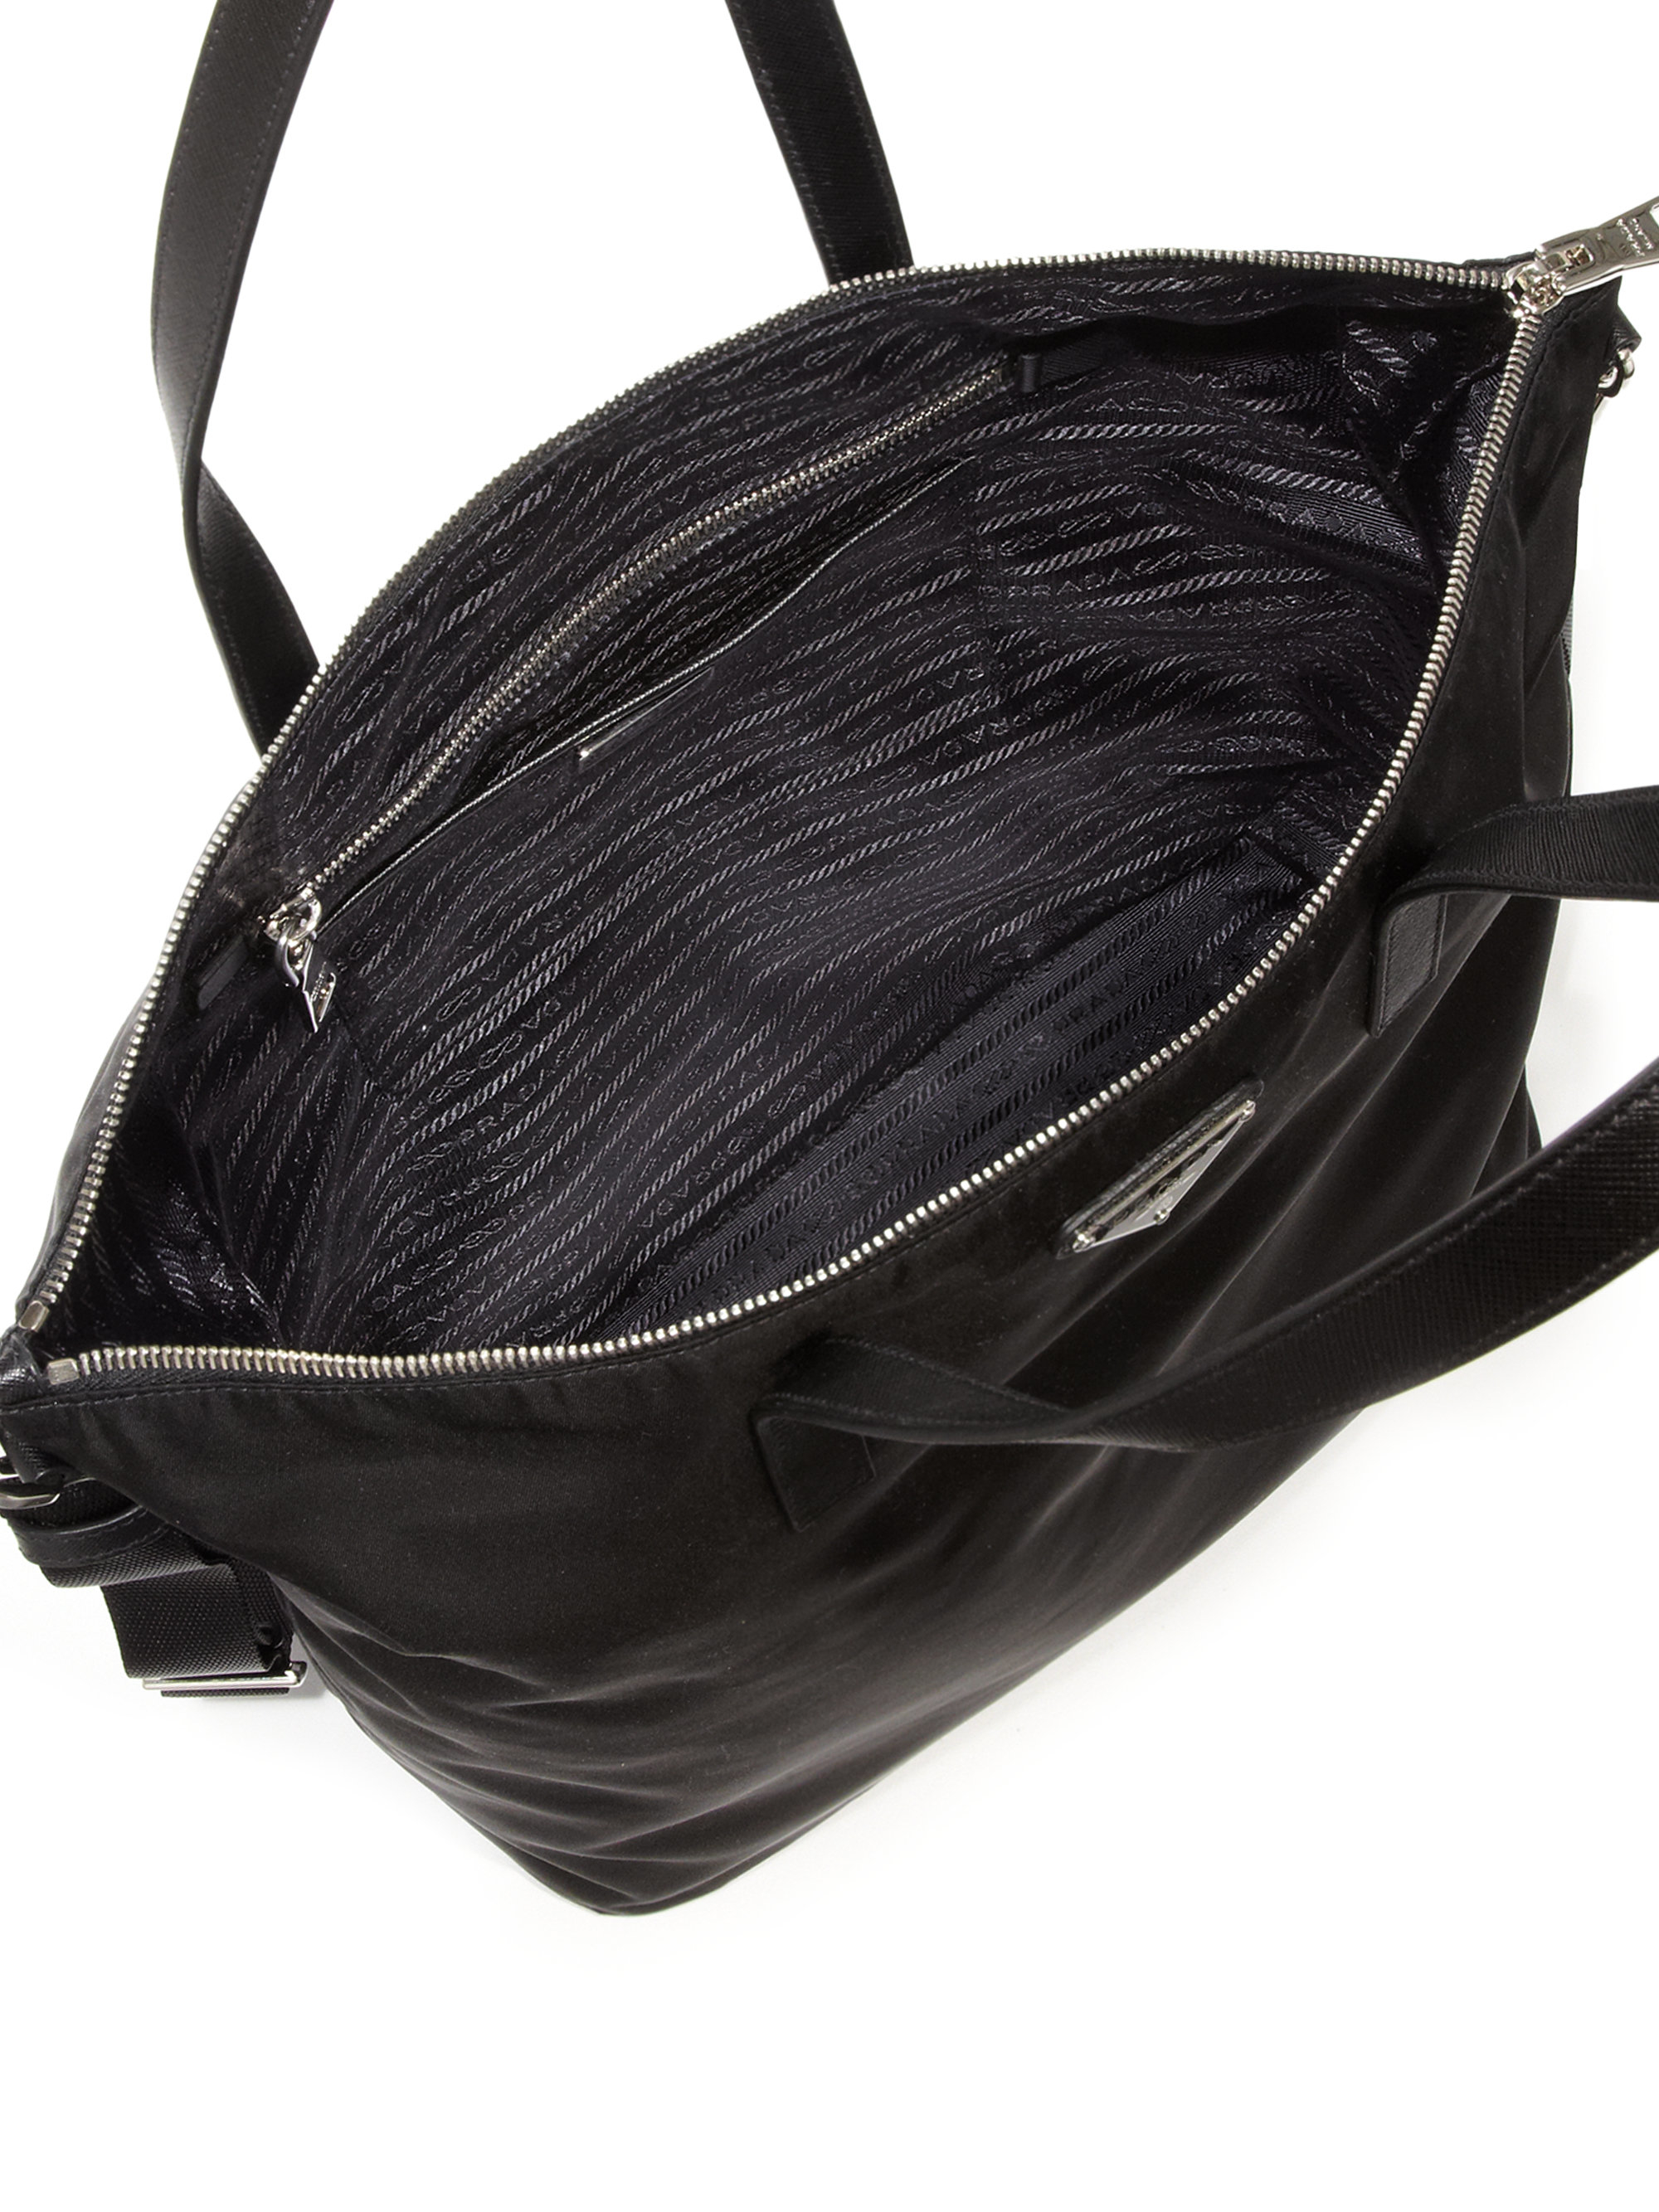 Prada Nylon \u0026amp; Leather Zip Tote in Black | Lyst  